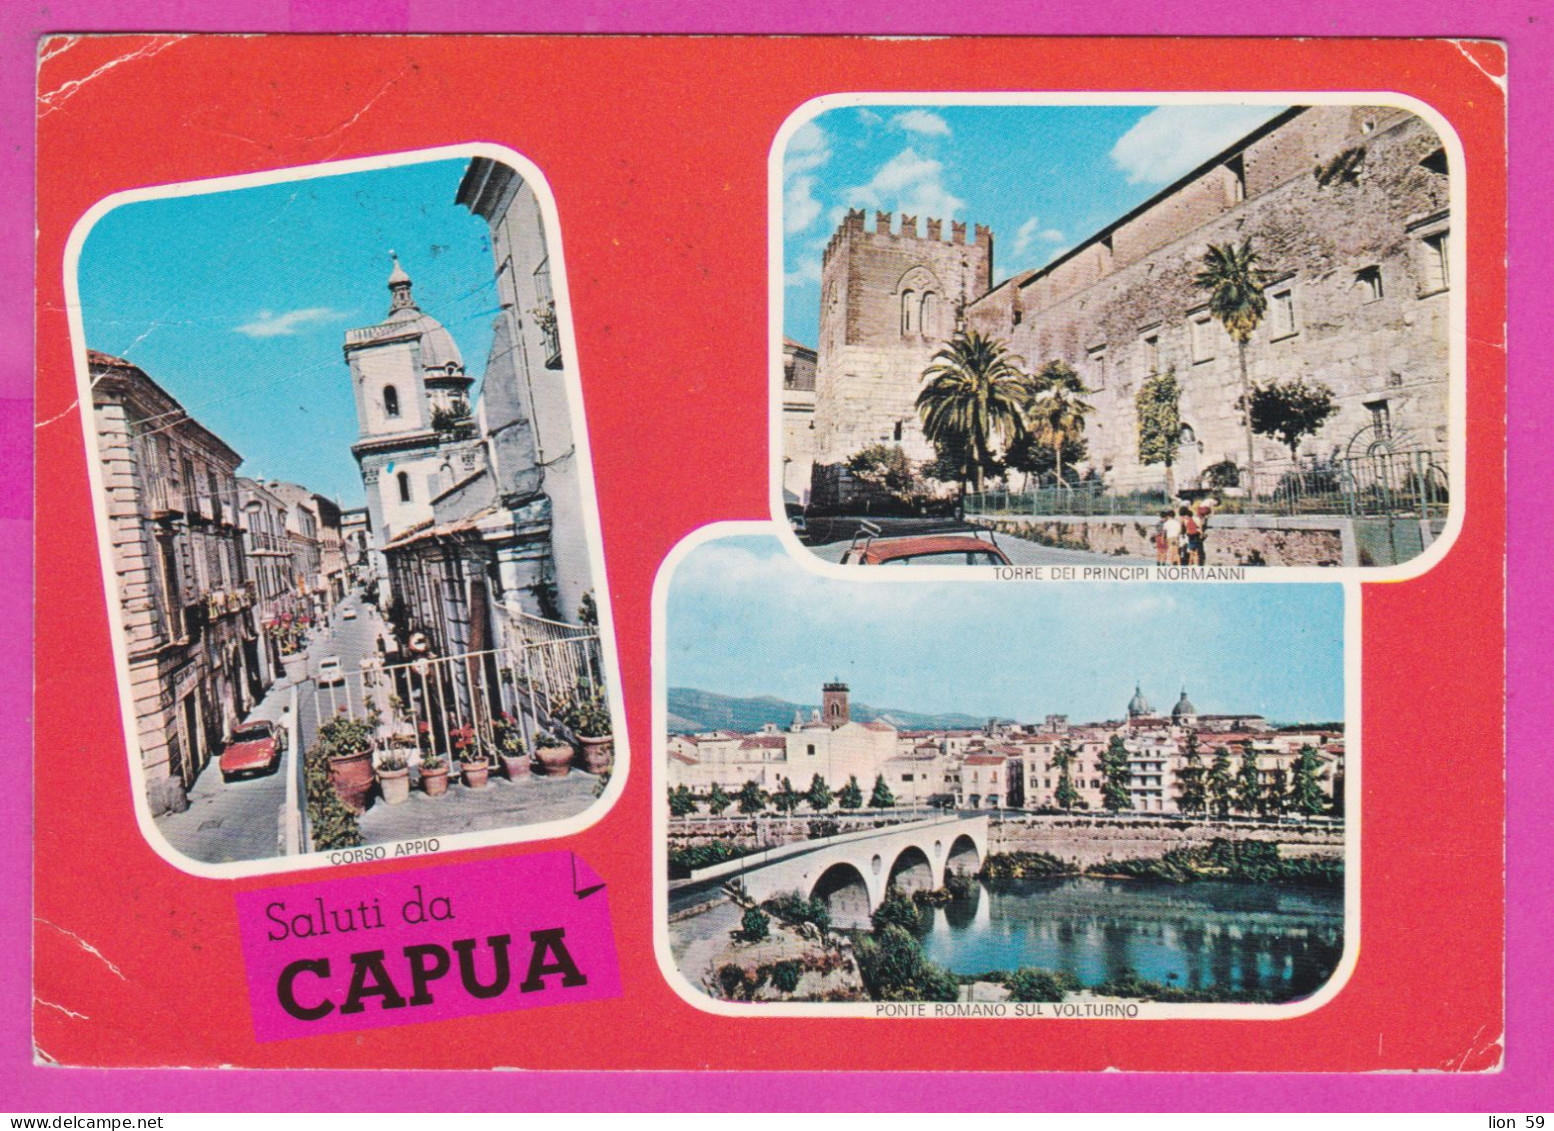 293957 / Italy - Saluti Da CAPUA 3 View Bridge Castle PC 1972 USED  40+50 L Coin Of Syracuse , Italia Italie Italien - 1971-80: Marcofilia